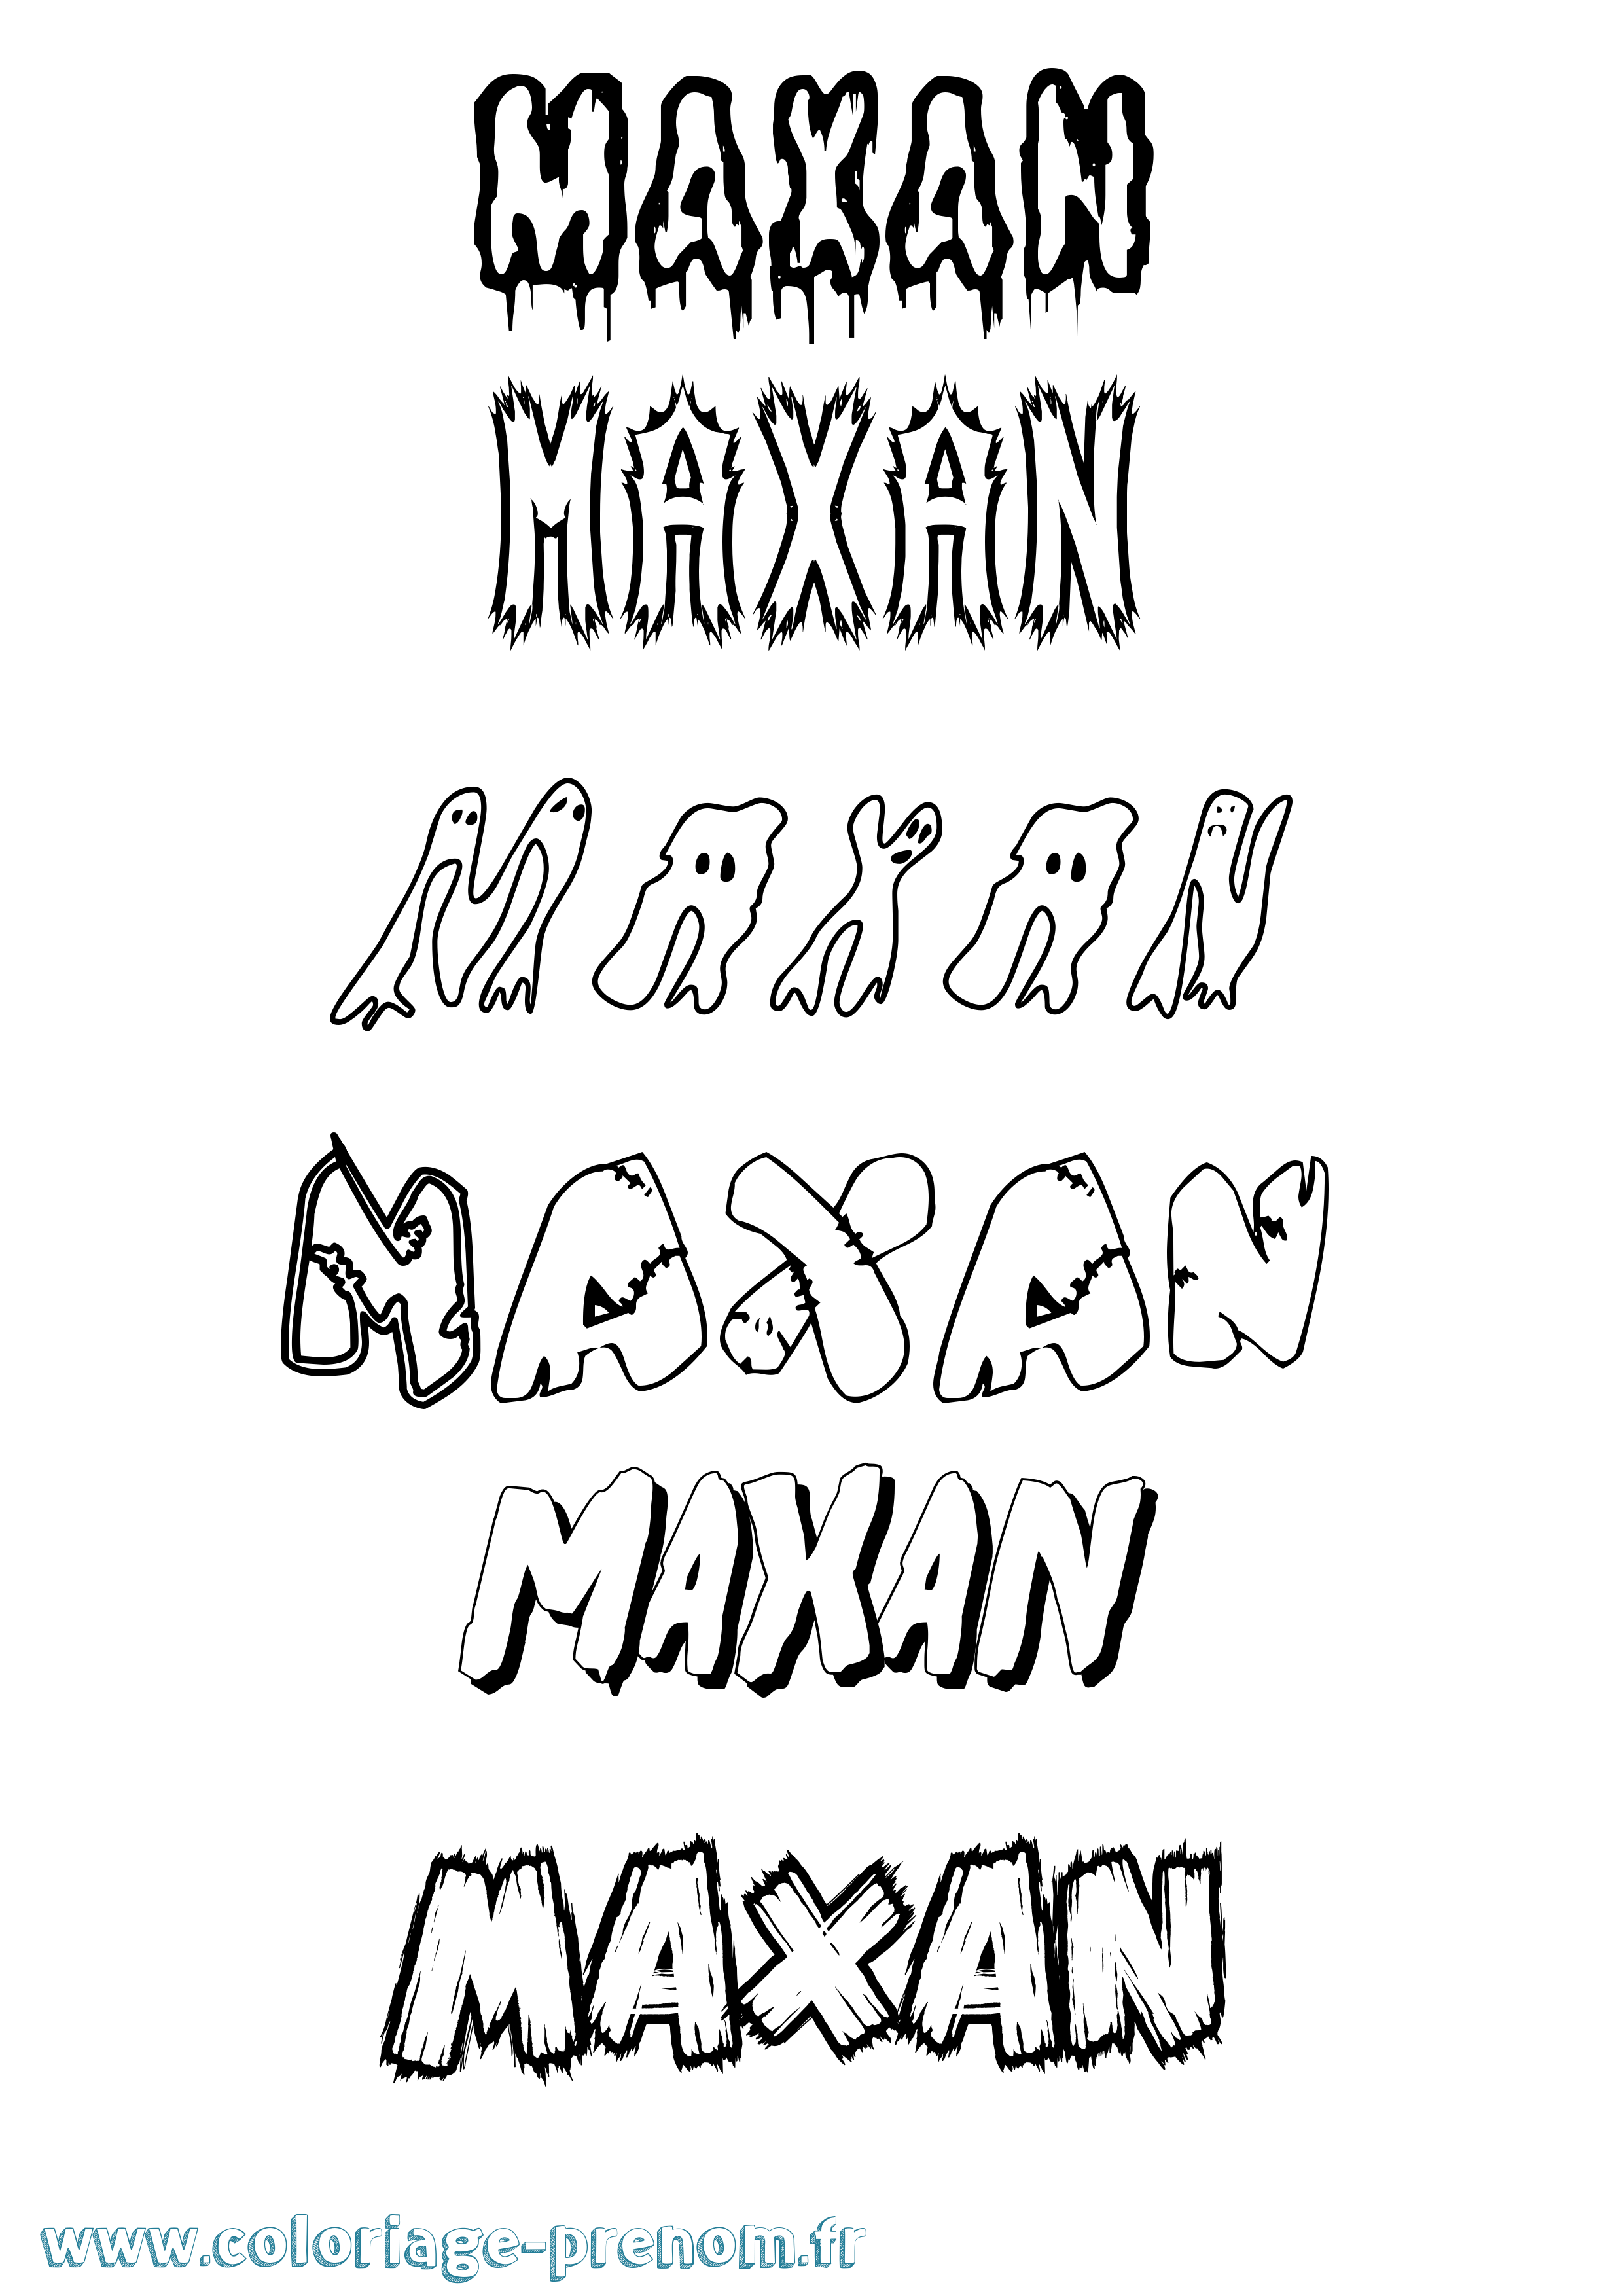 Coloriage prénom Maxan Frisson